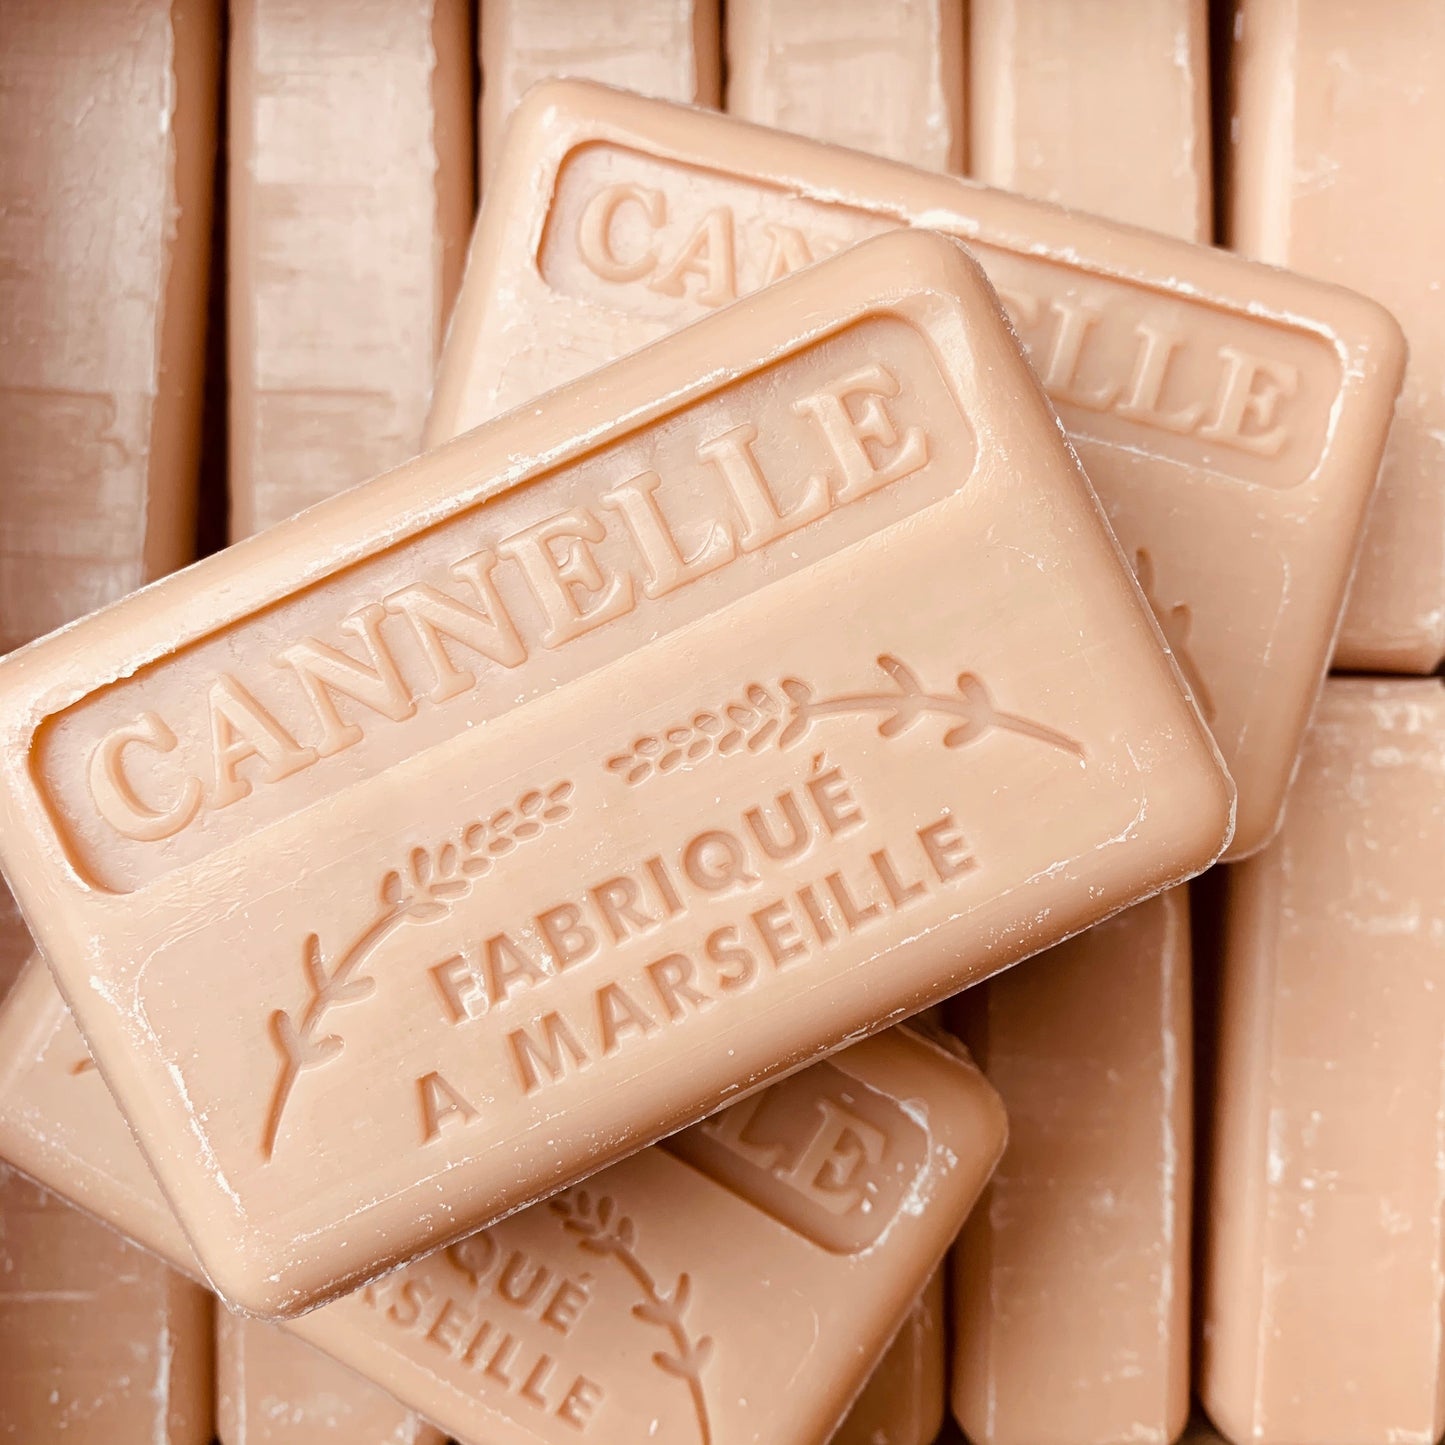 Cannelle (Cinnamon) Soap